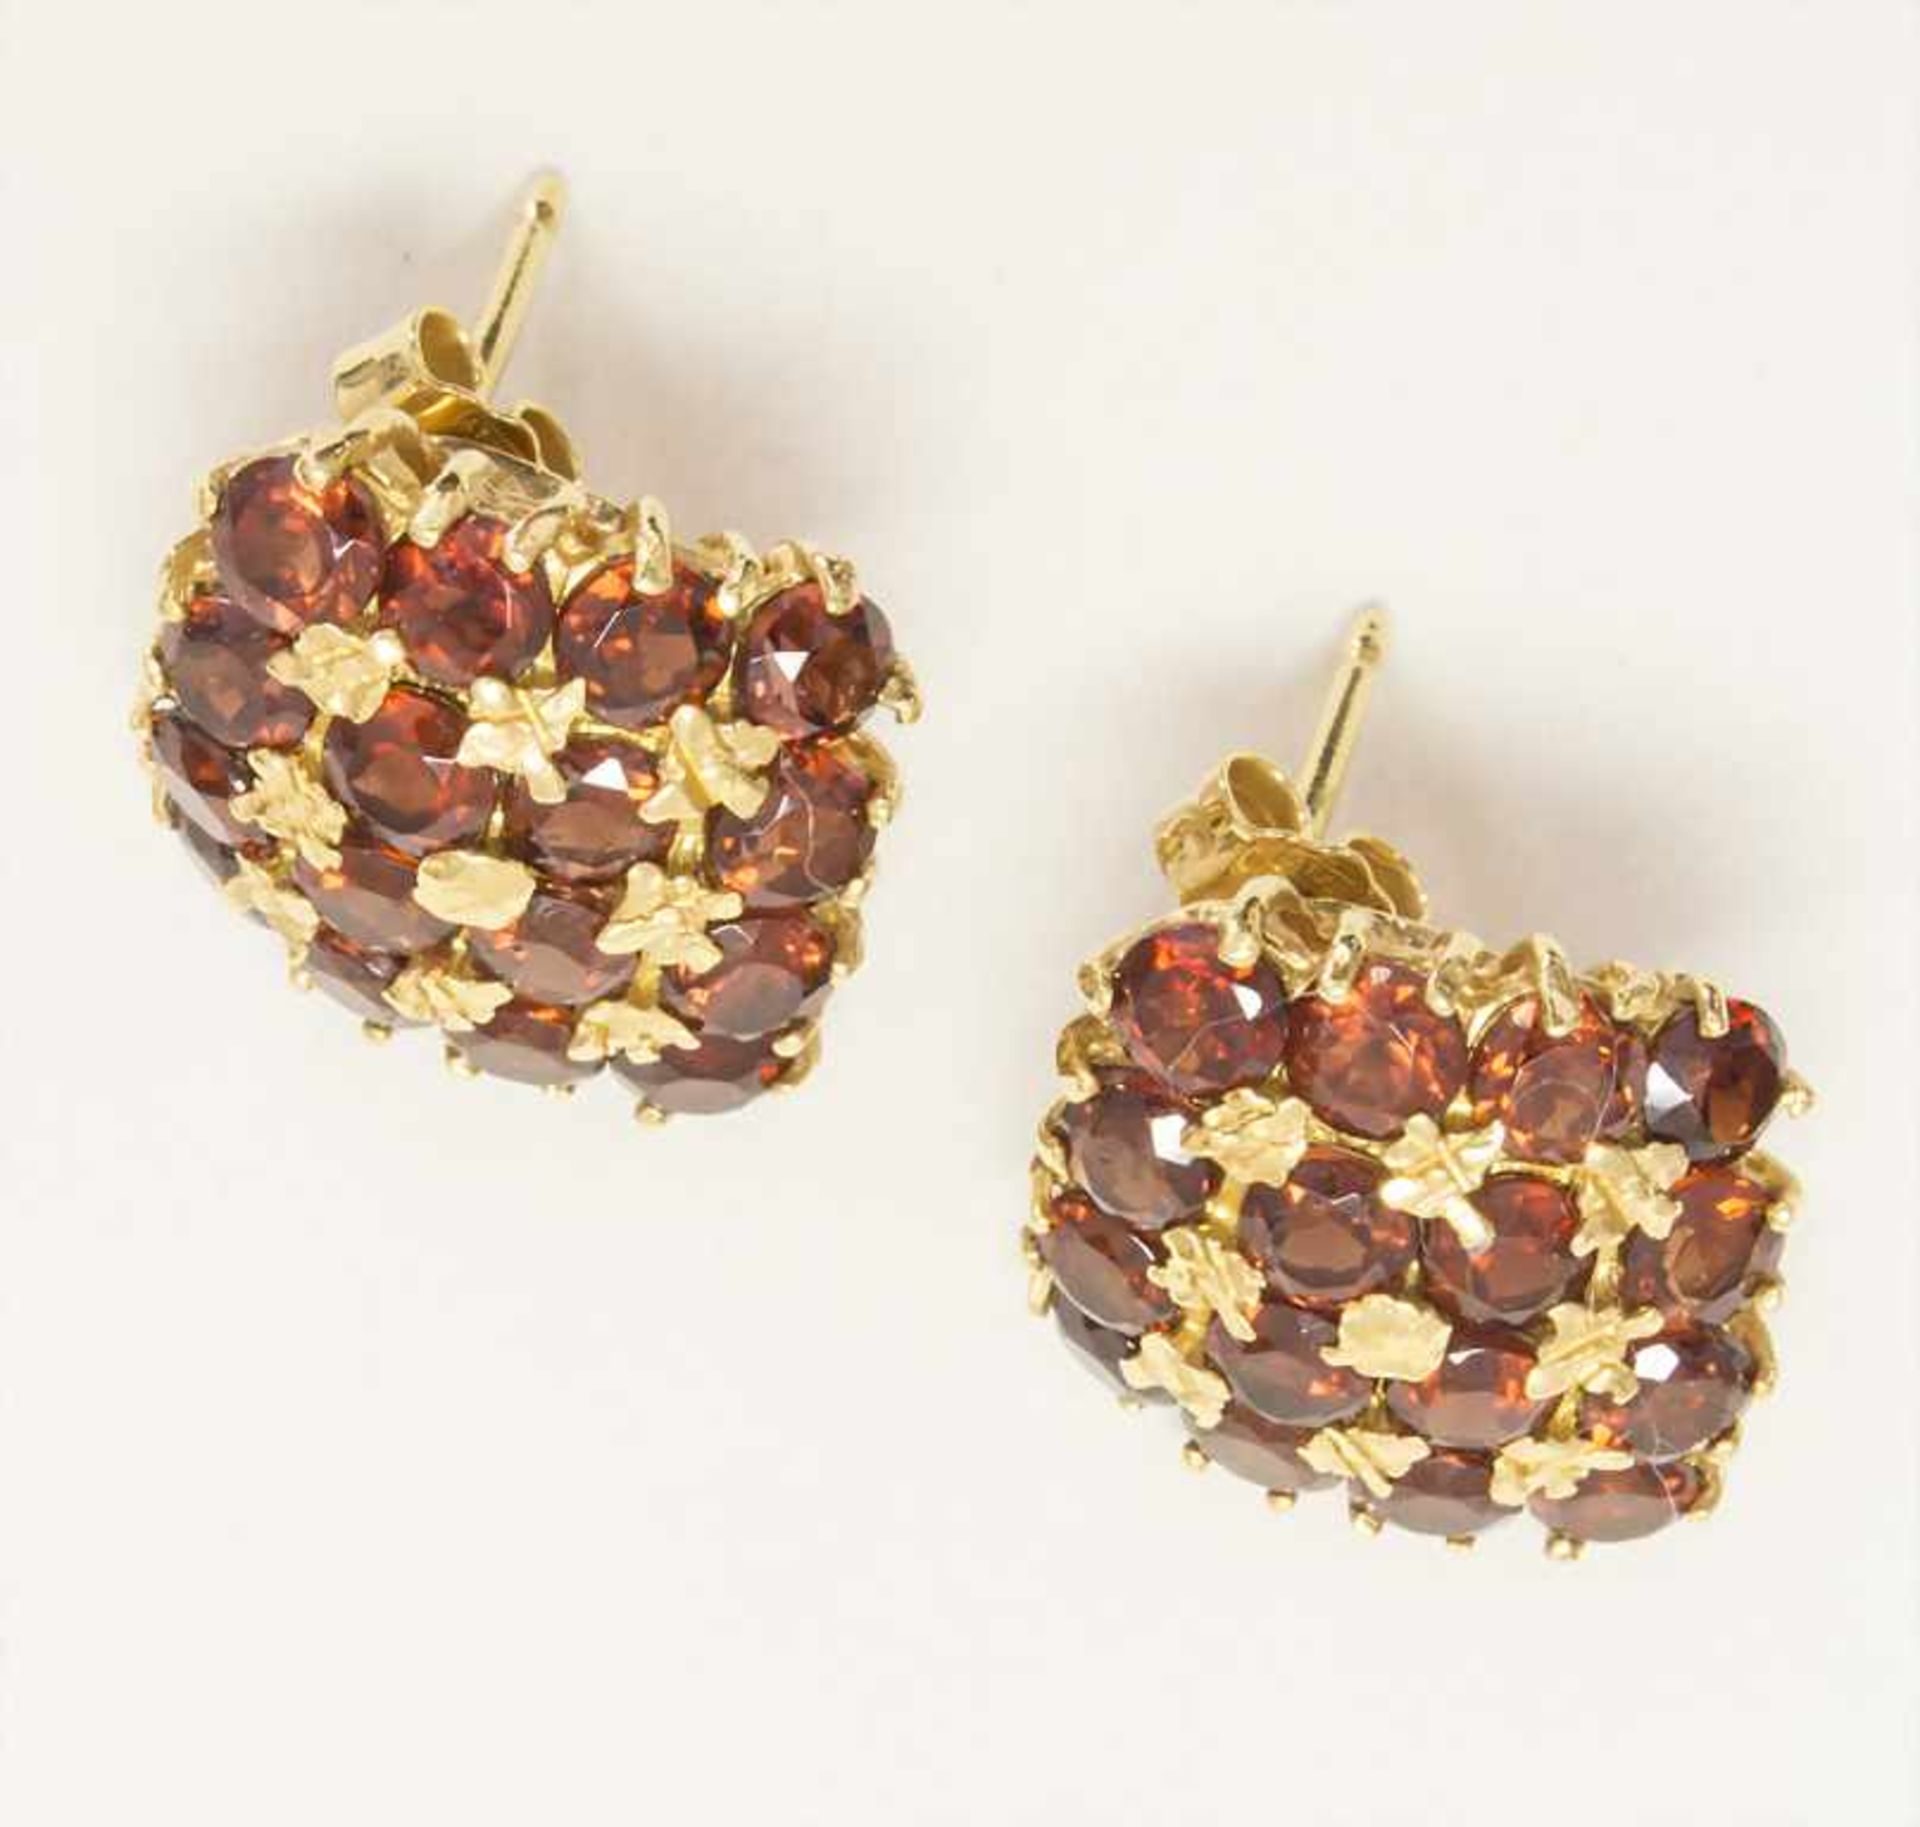 Paar Ohrstecker mit Granat / A pair of earrings with garnet